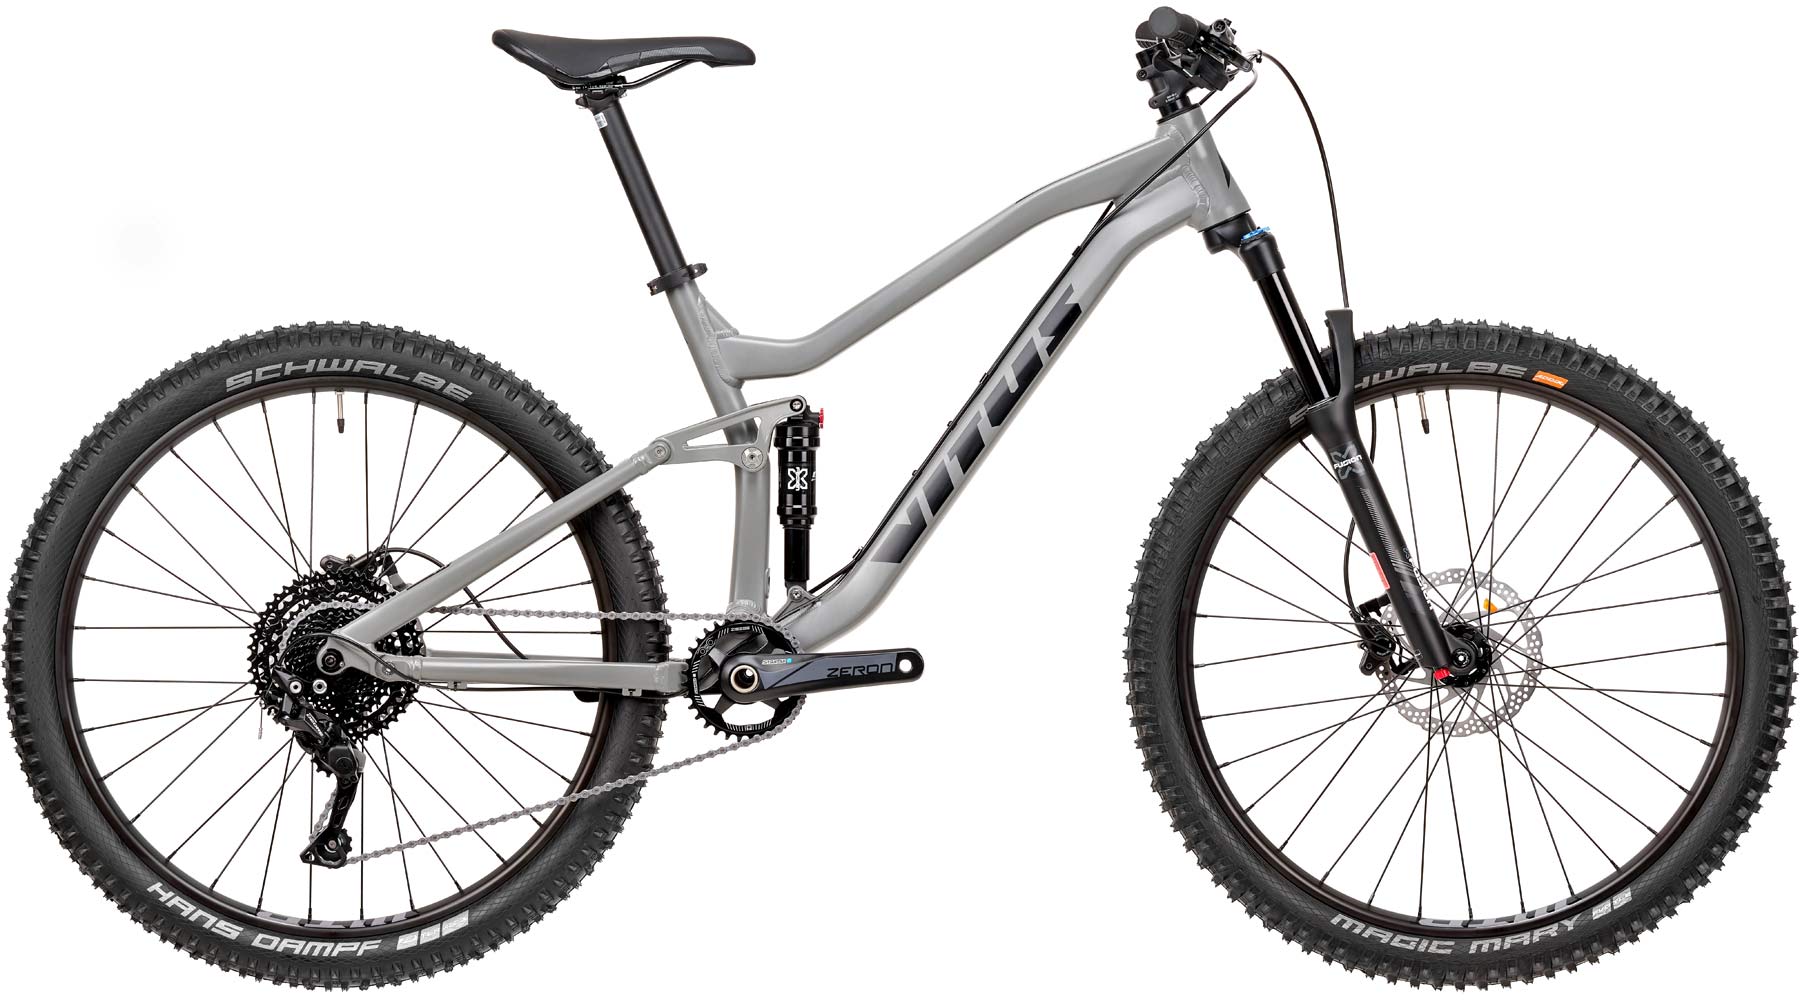 2020 Vitus Mythique trail bike, affordable aluminum alloy aluminium trail mountain bike, 130mm or 140mm travel, 27.5